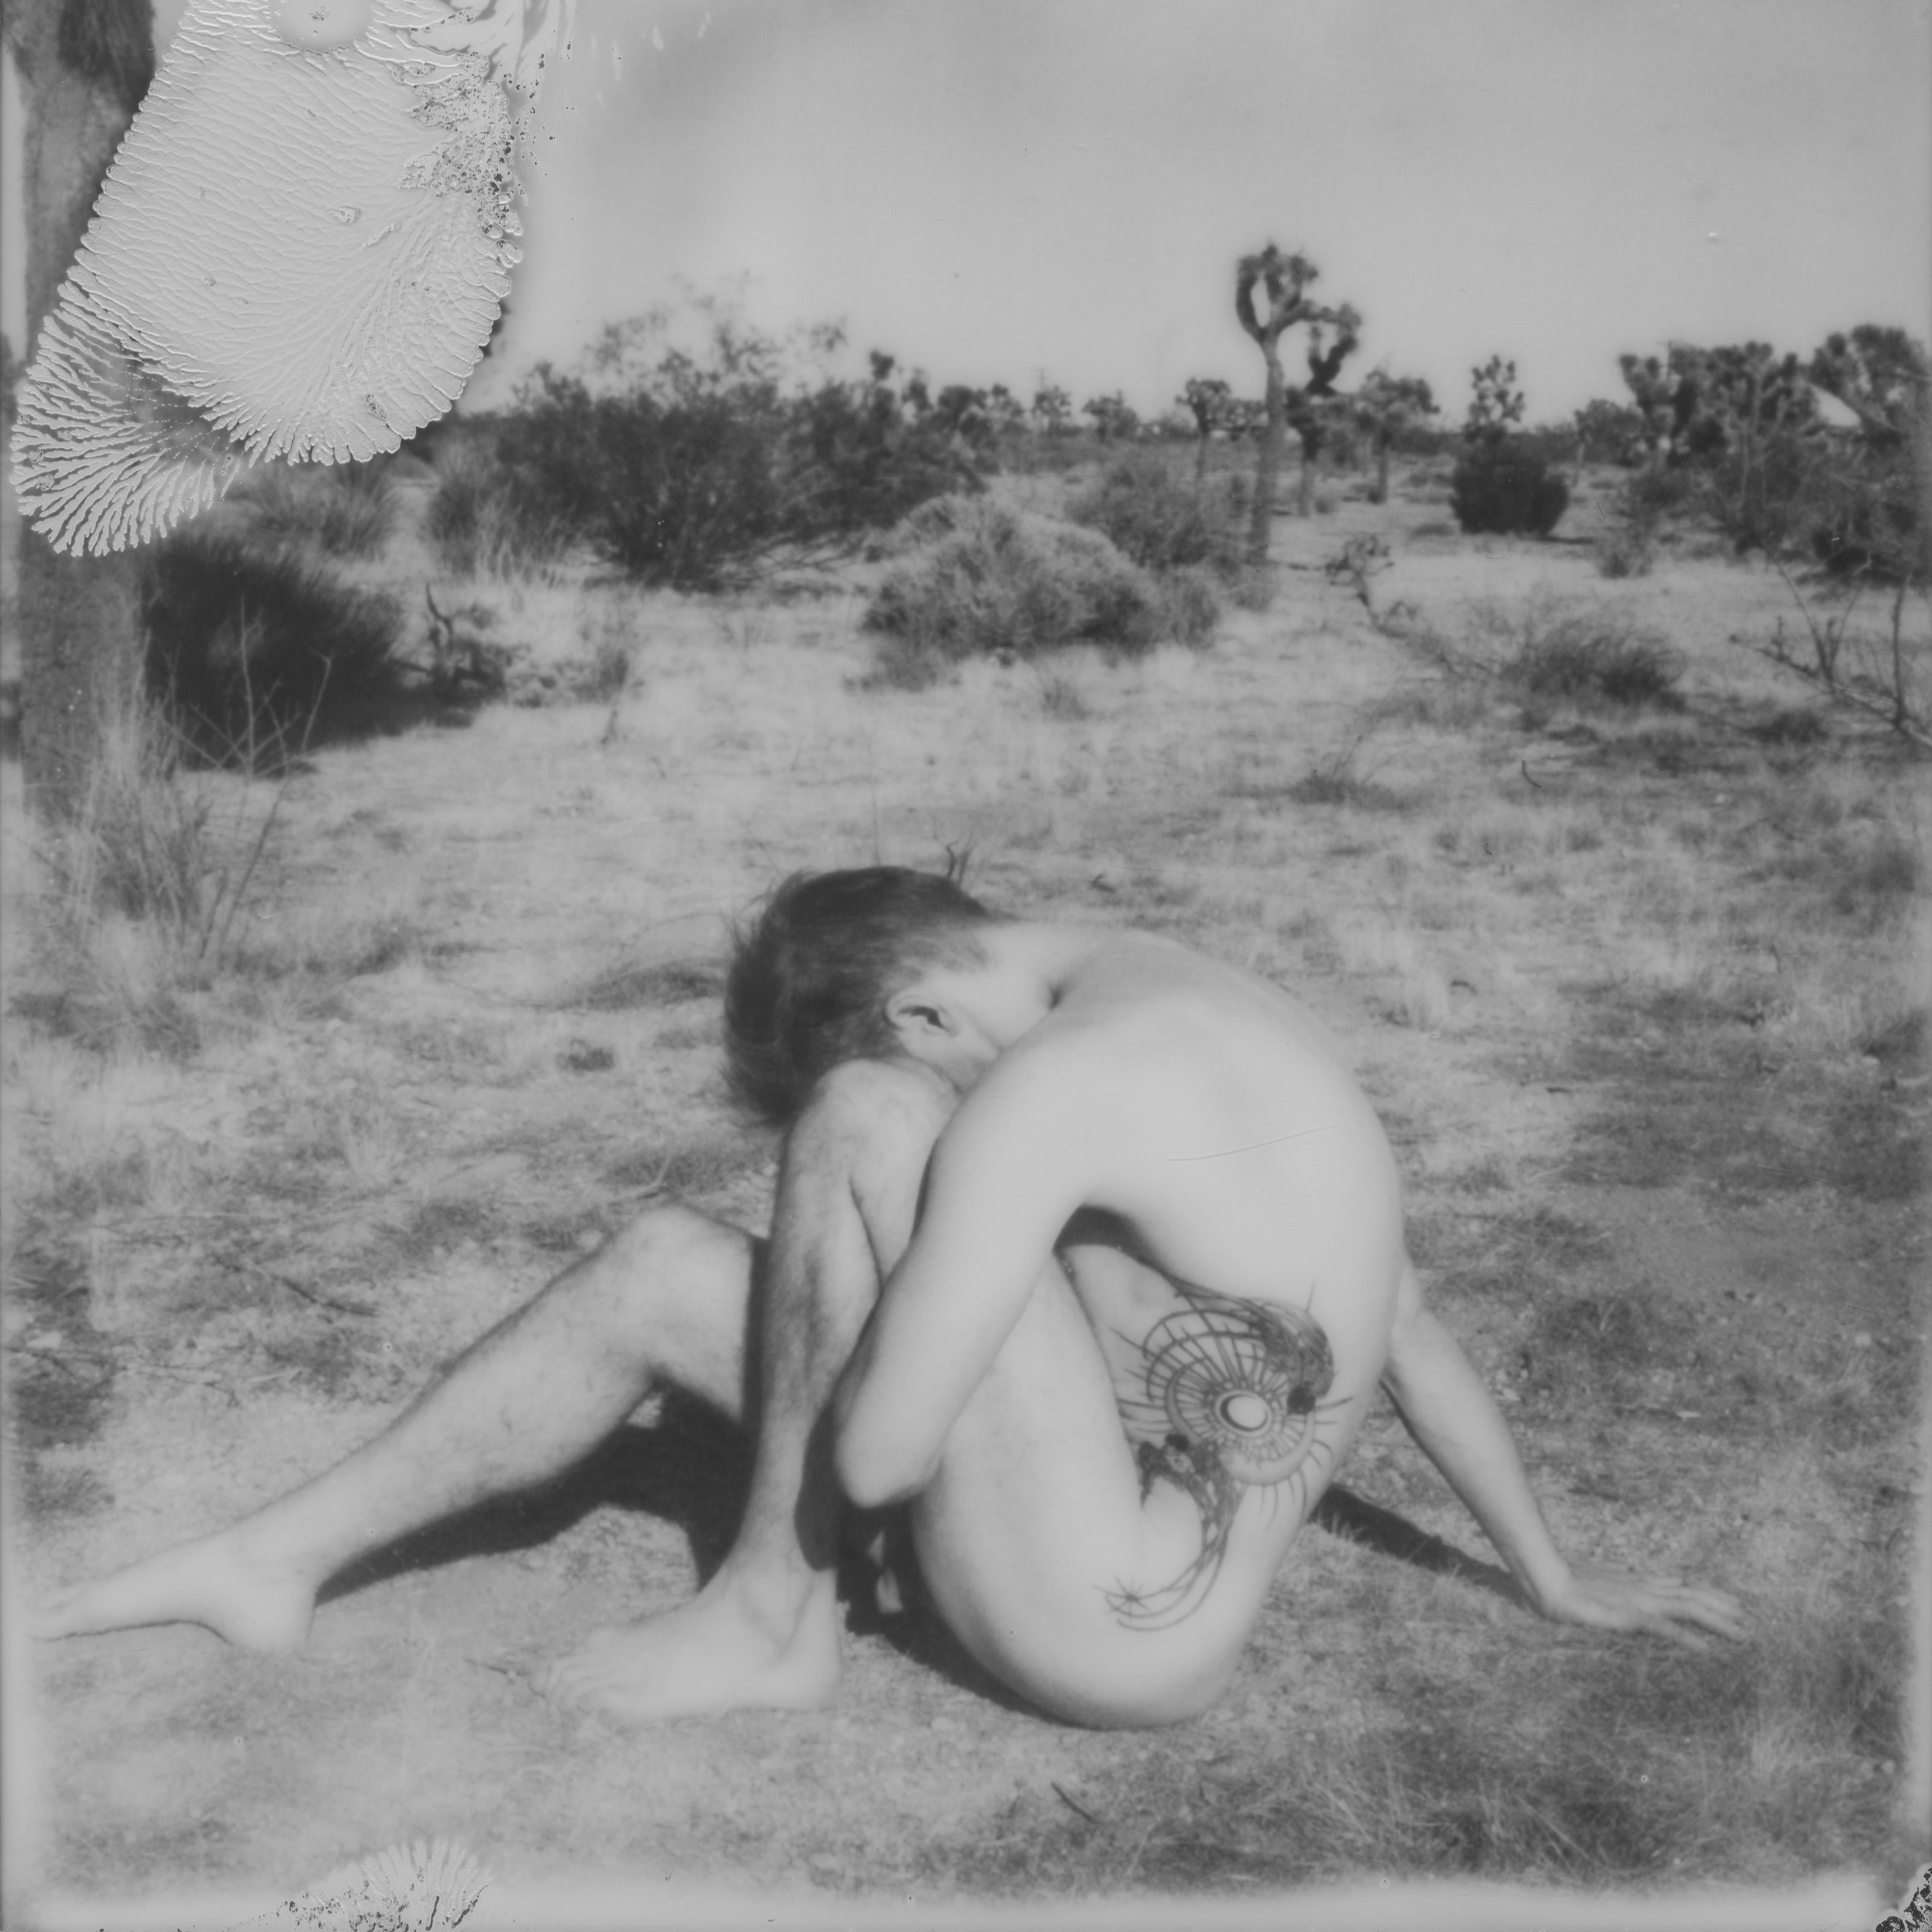 Kirsten Thys van den Audenaerde Nude Photograph - Come undone - Contemporary, Polaroid, Nude, 21st Century, Joshua Tree